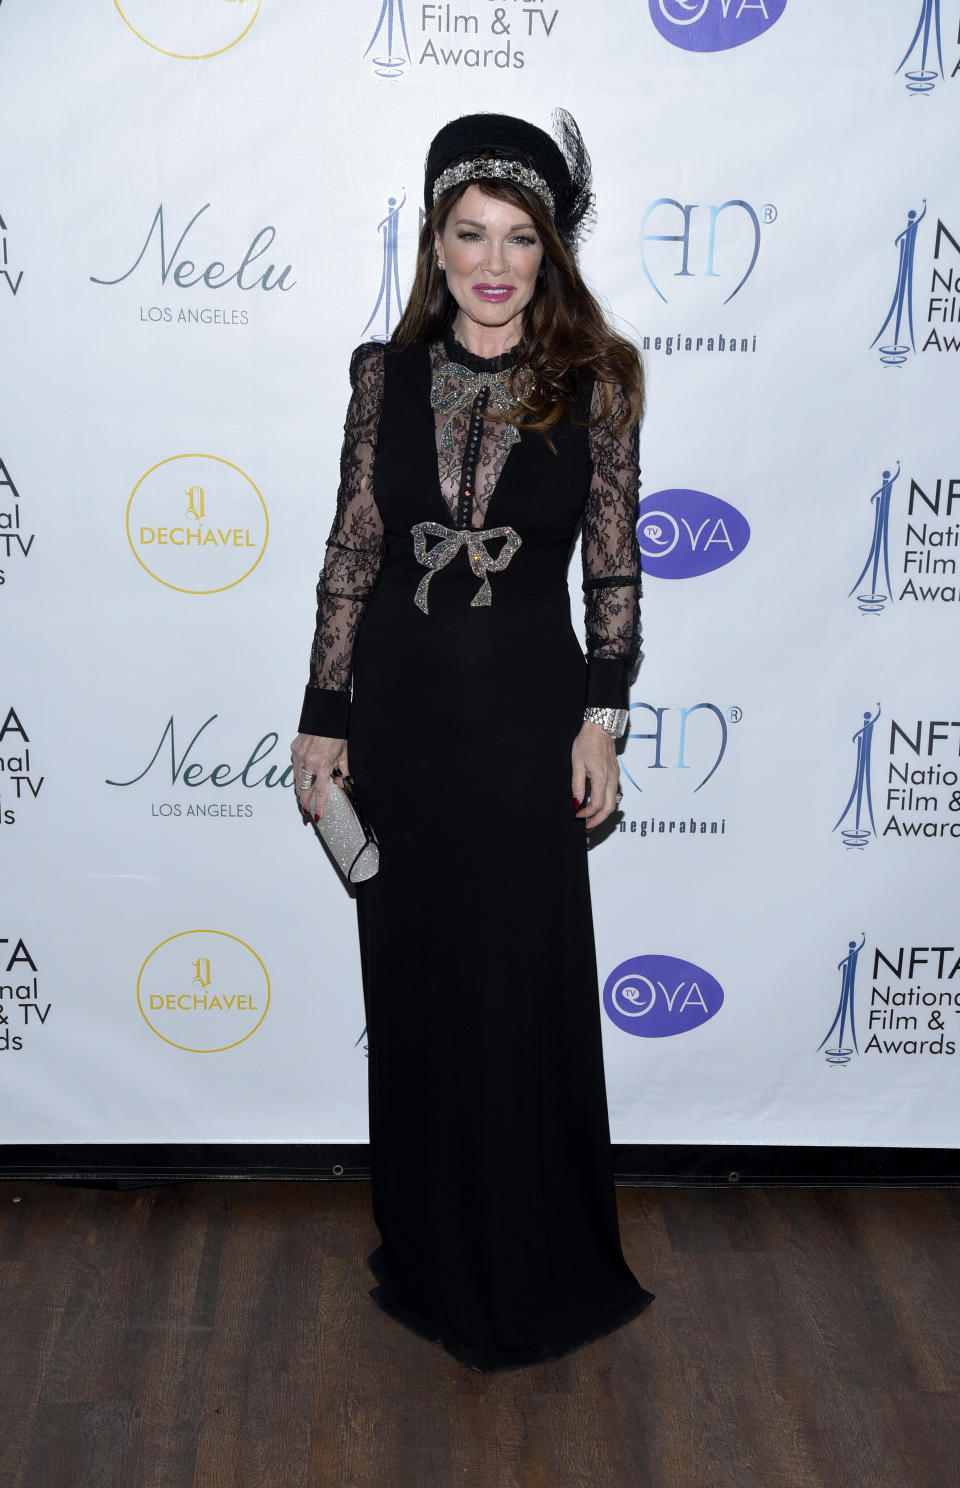 Lisa Vanderpump at the National Film and TV Awards in Los Angeles on Dec. 3.